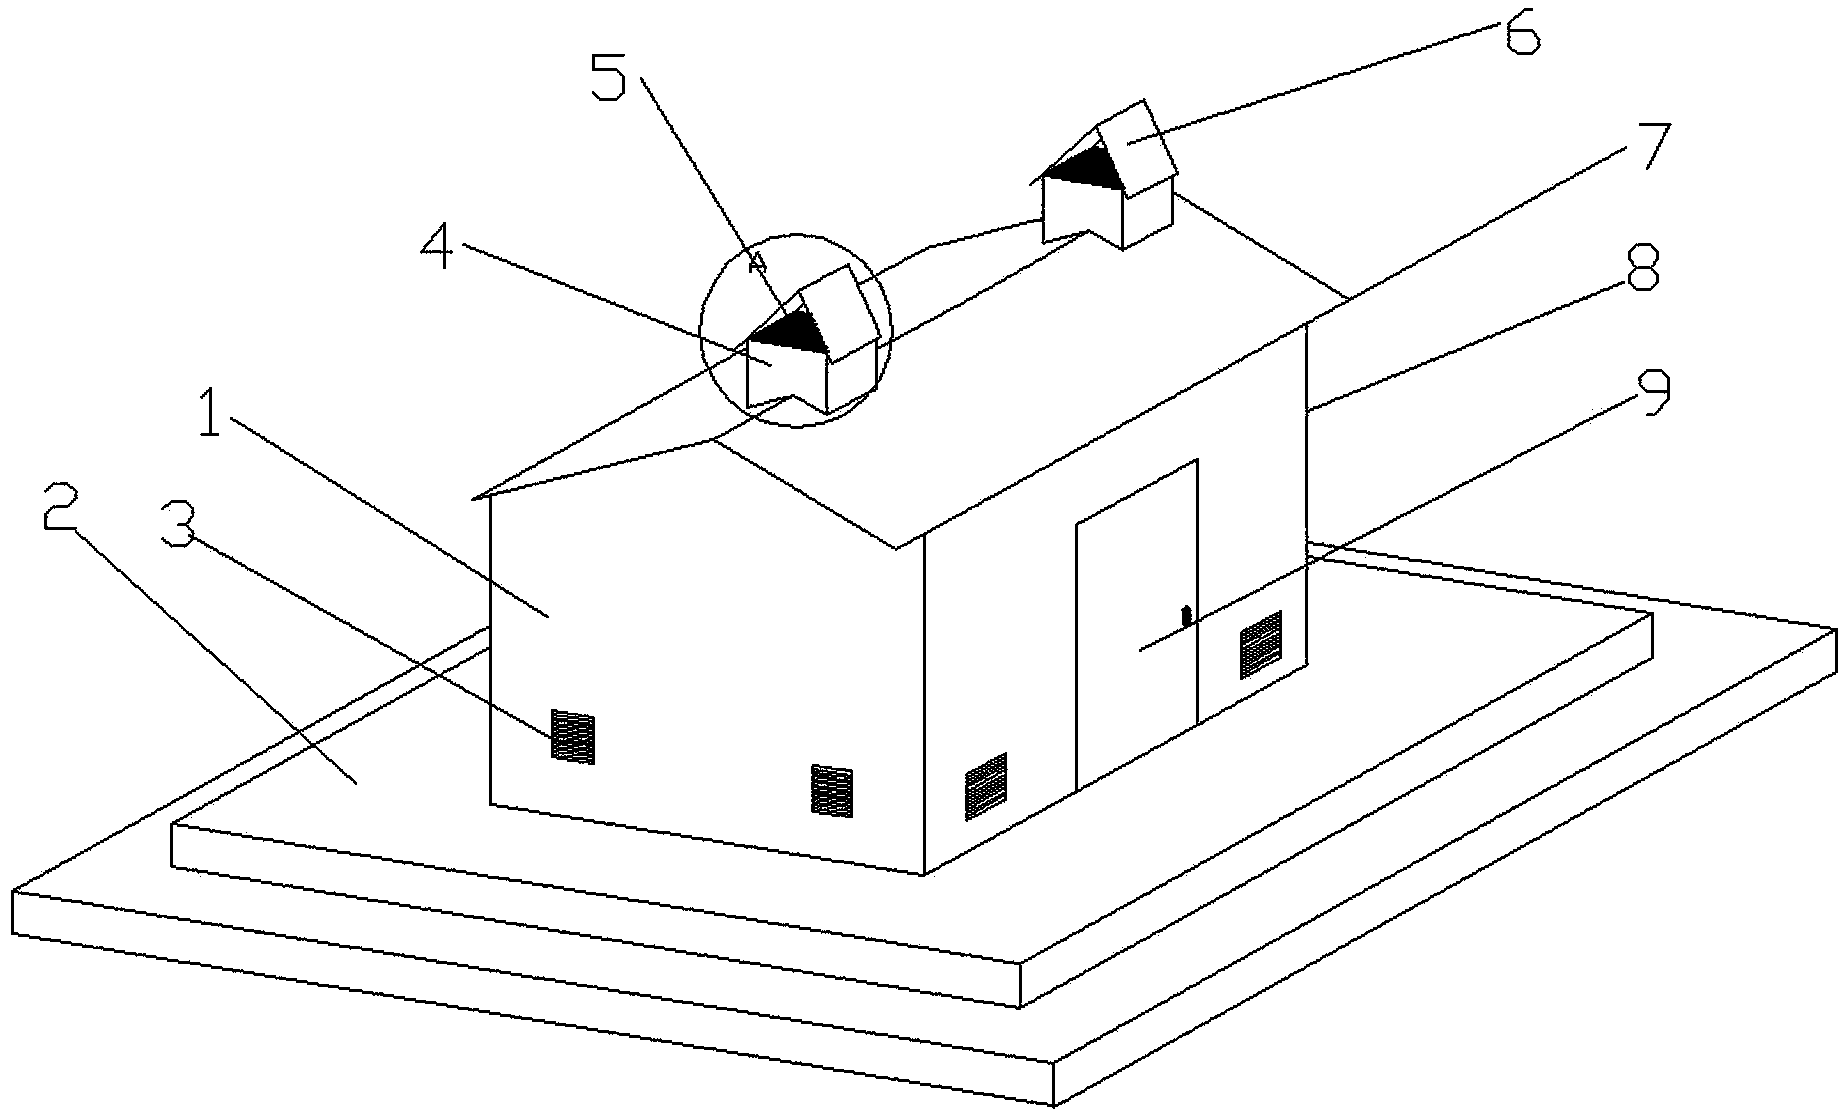 Novel box-type transformer substation